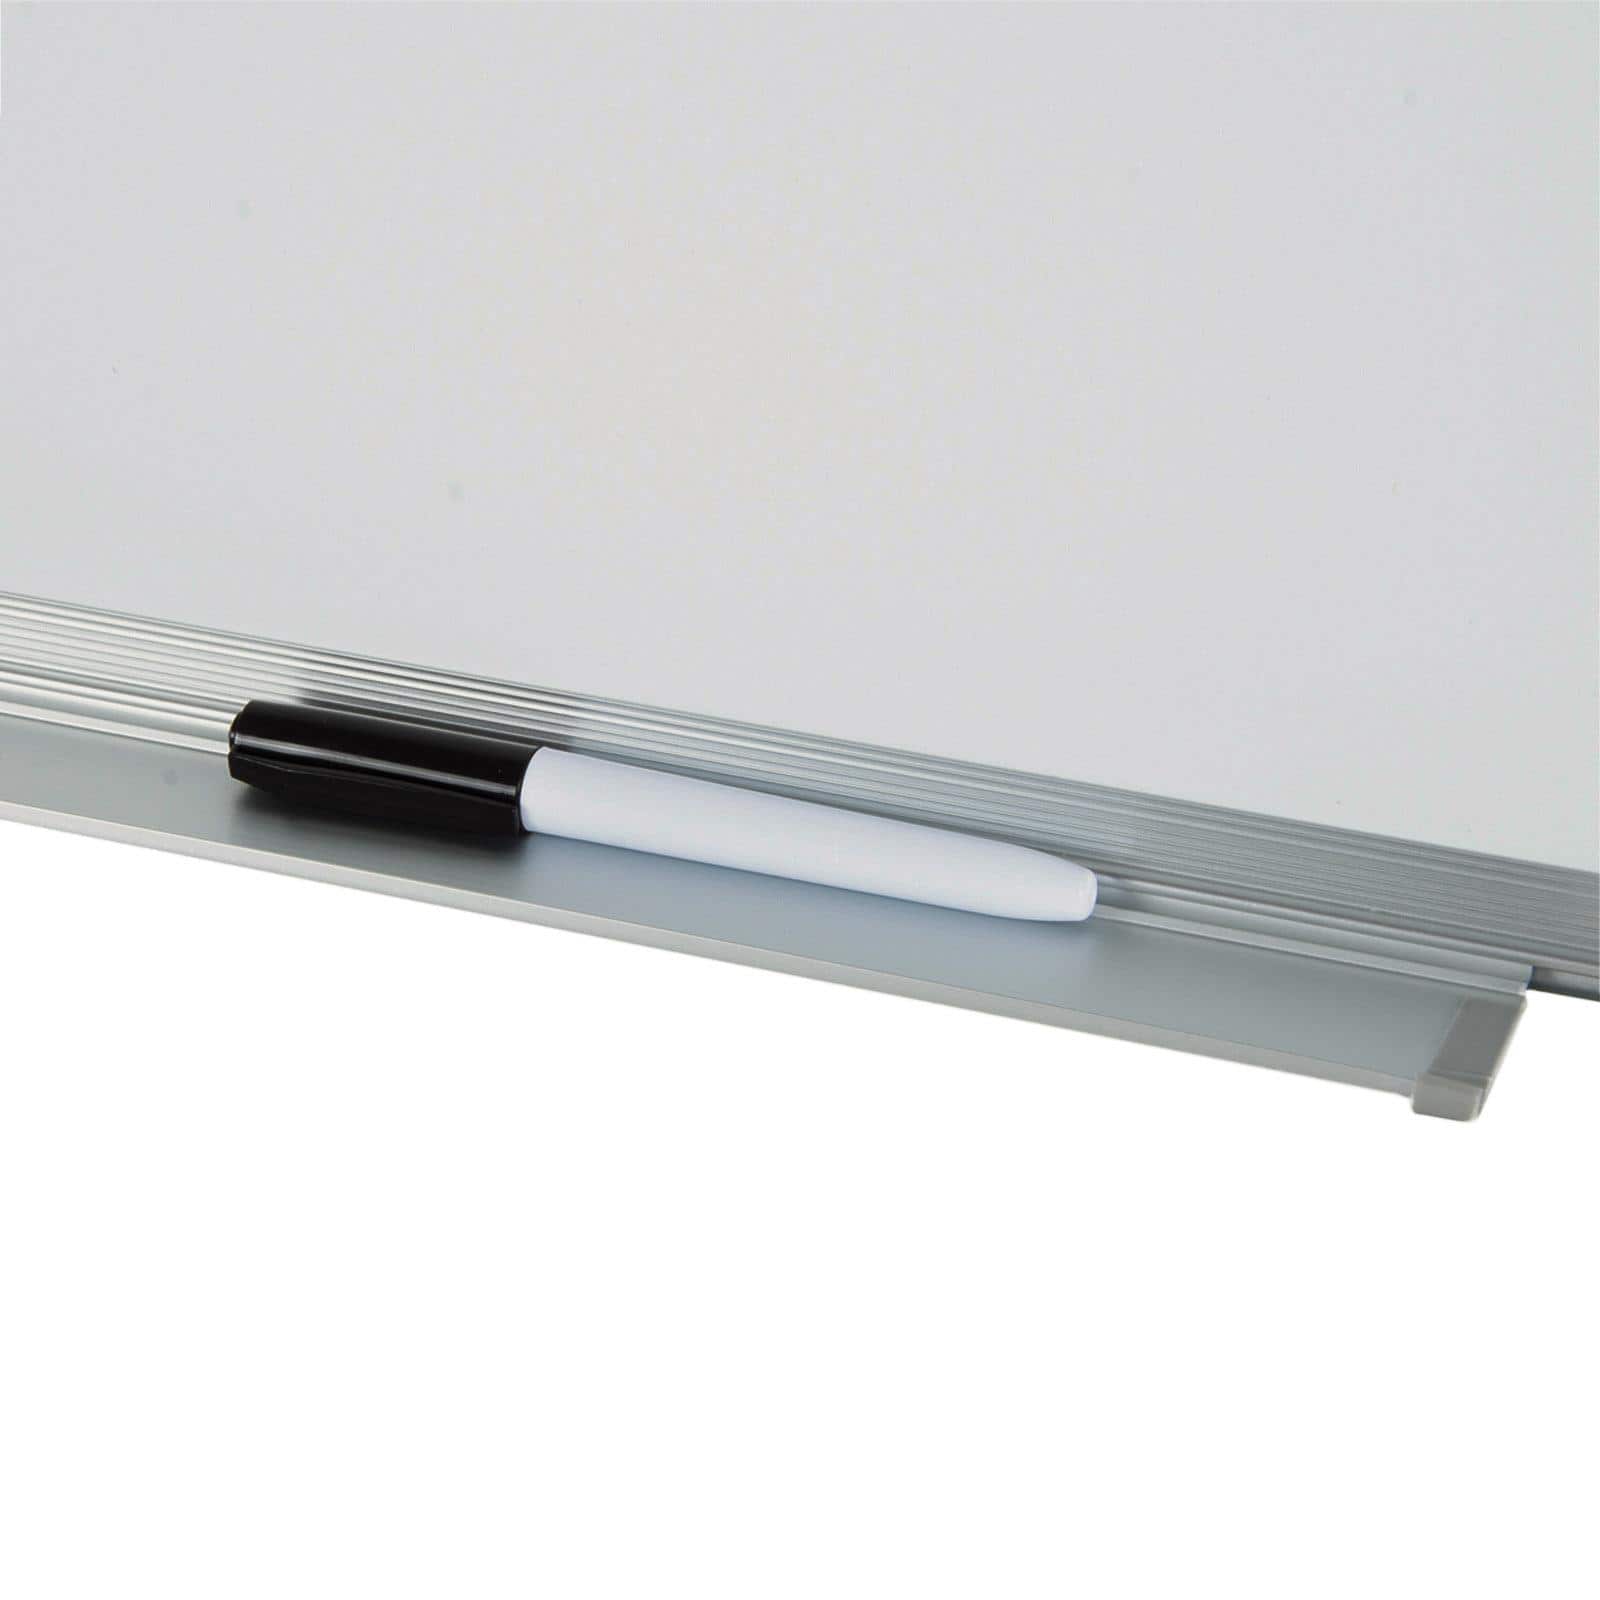 BuroMi magnetisch Whiteboard 2.0 - 60x45cm - incl. stift en magneten